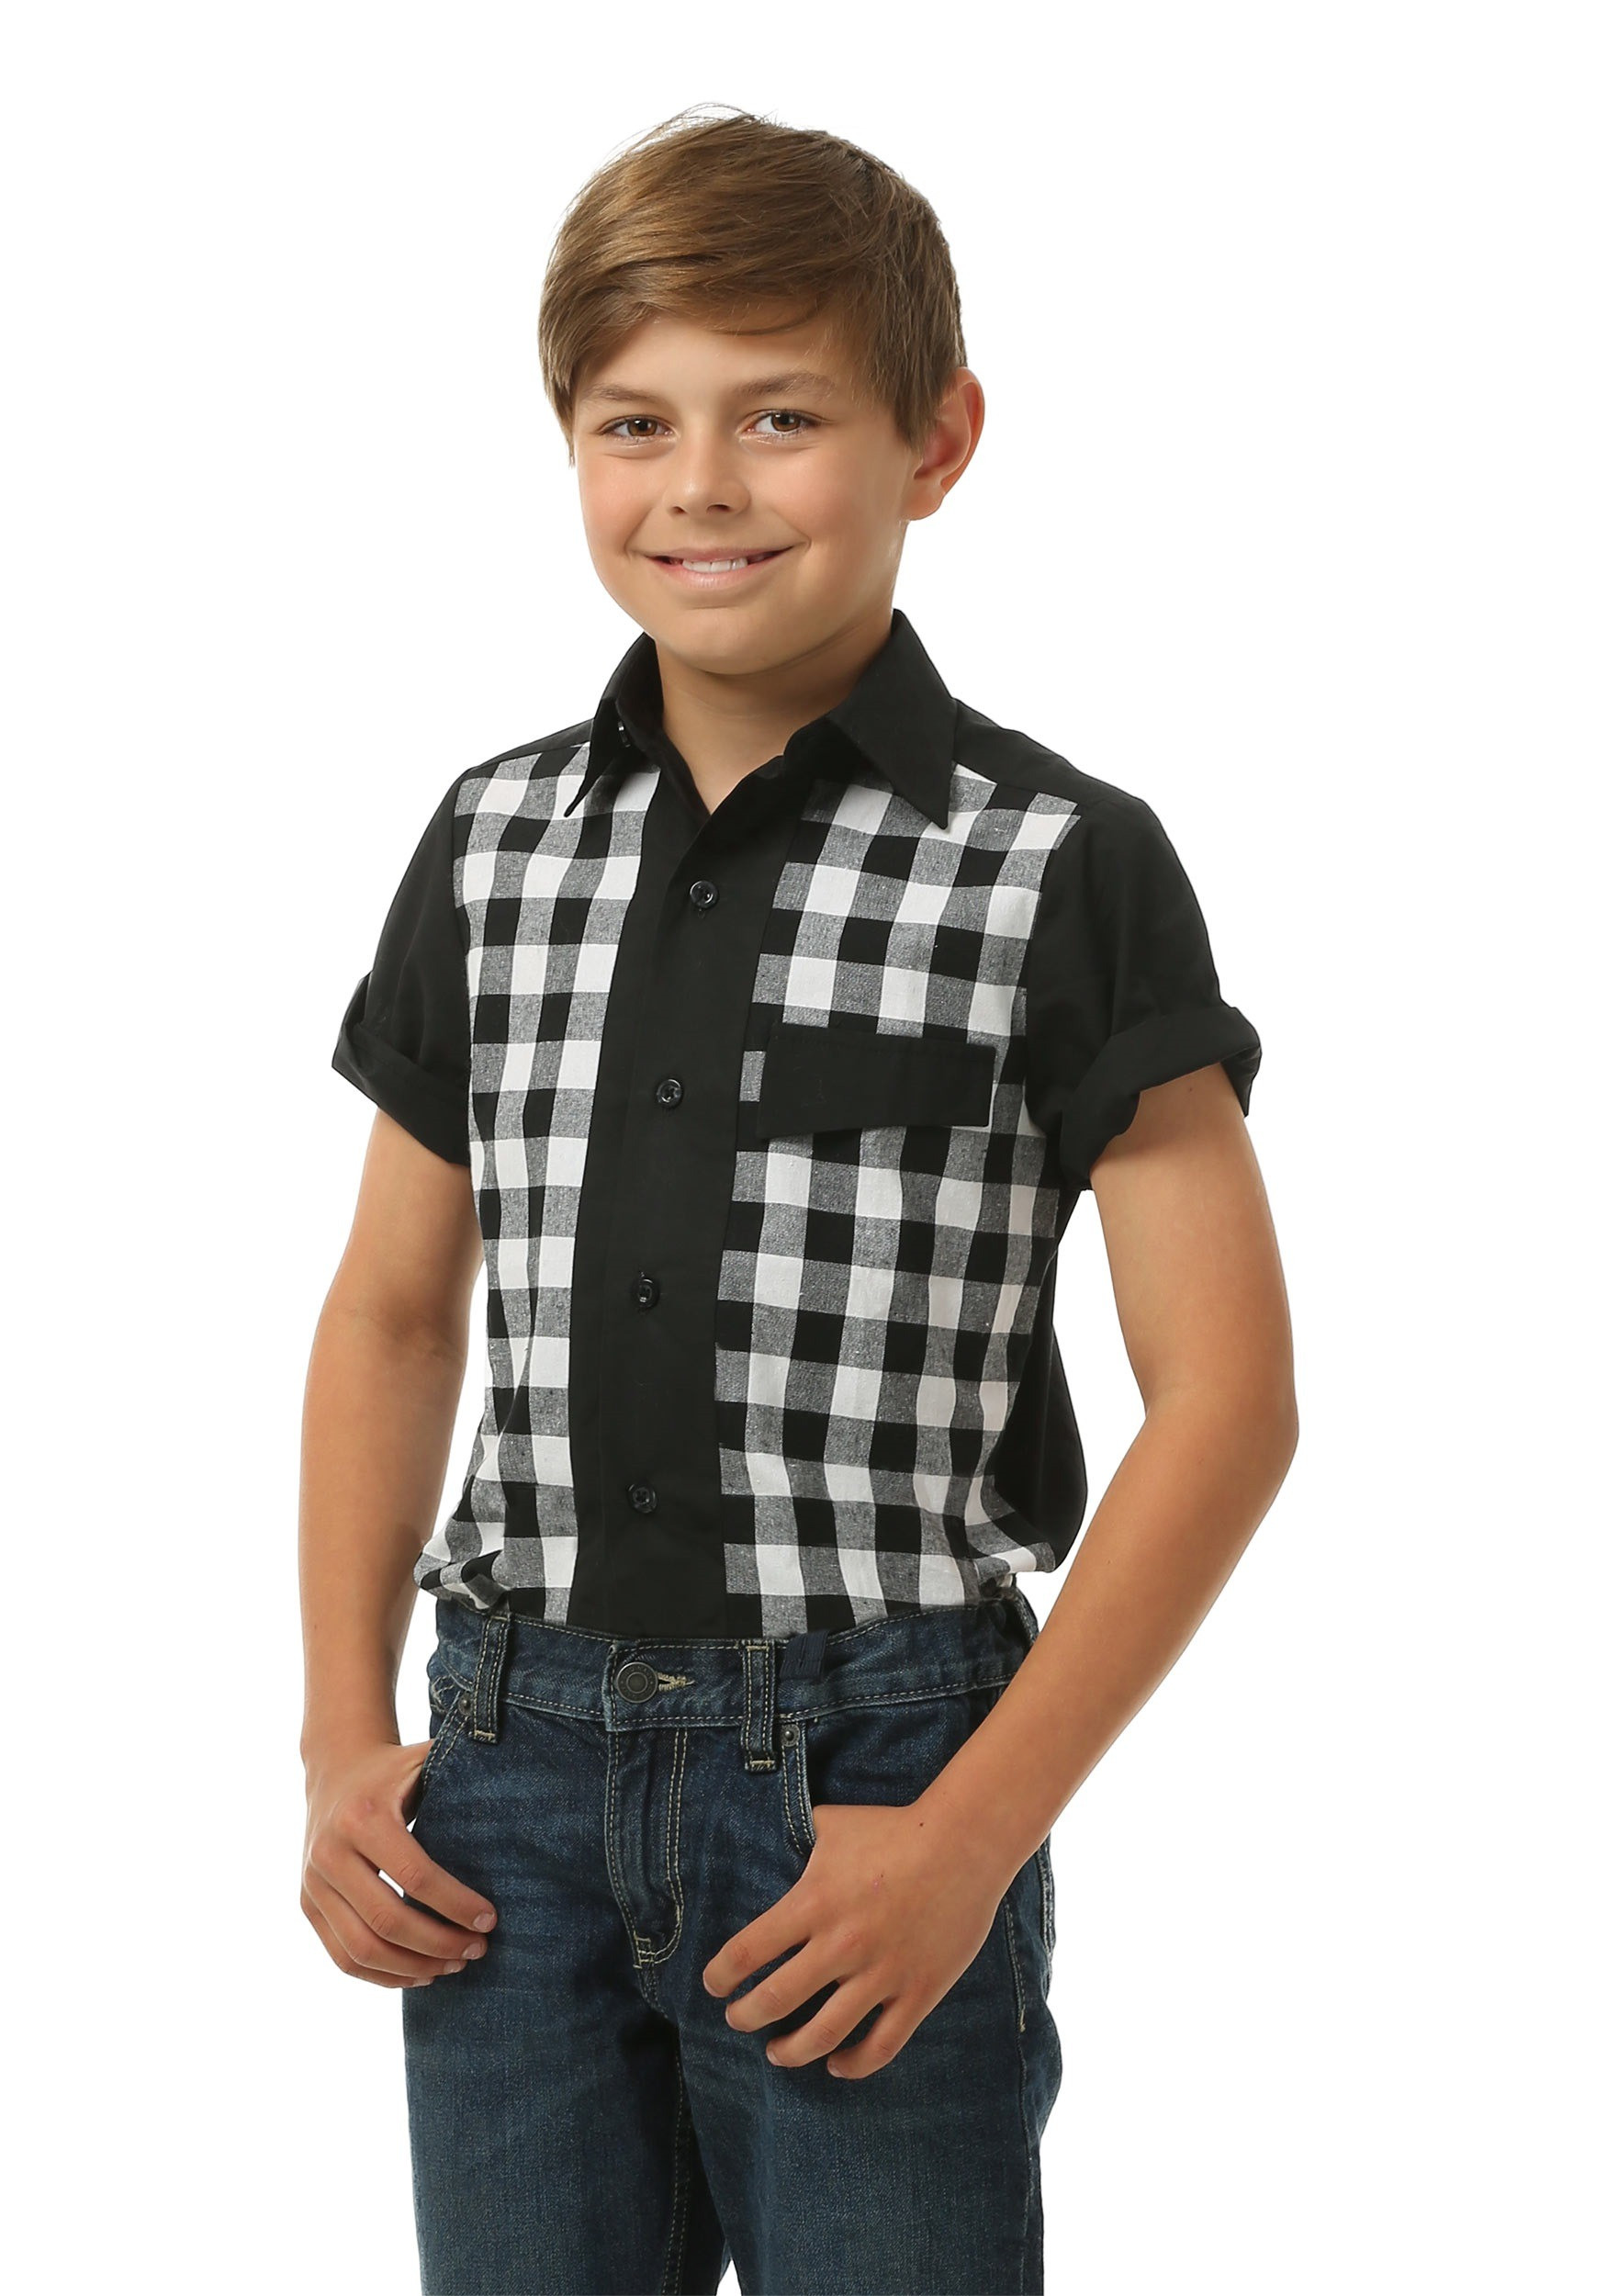 50S Fashion For Kids
 Kids 50s Bowler Shirt